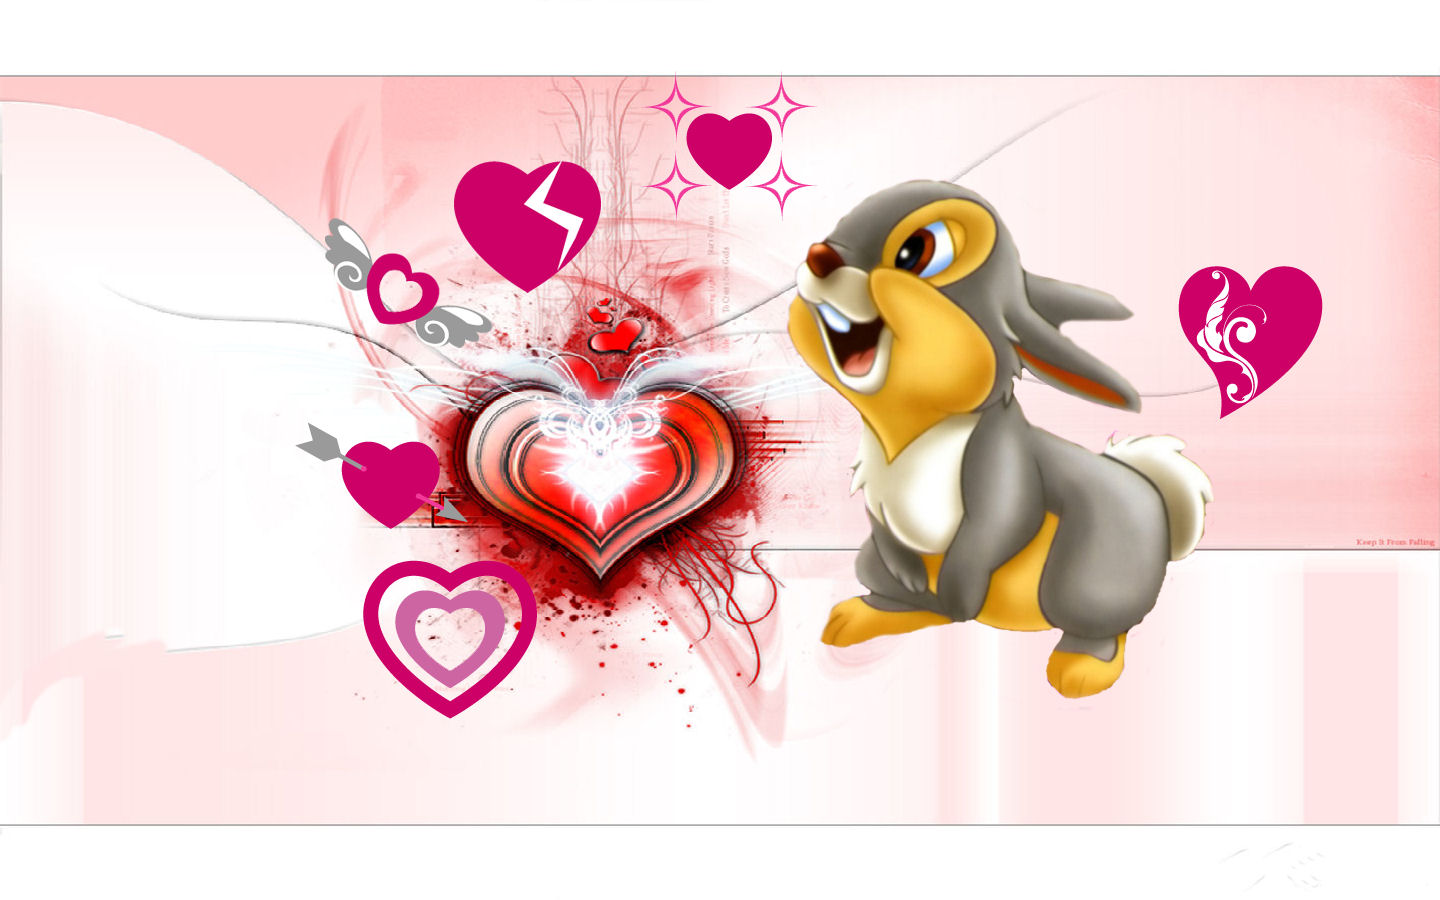 Disney Valentines Wallpaper Valenti